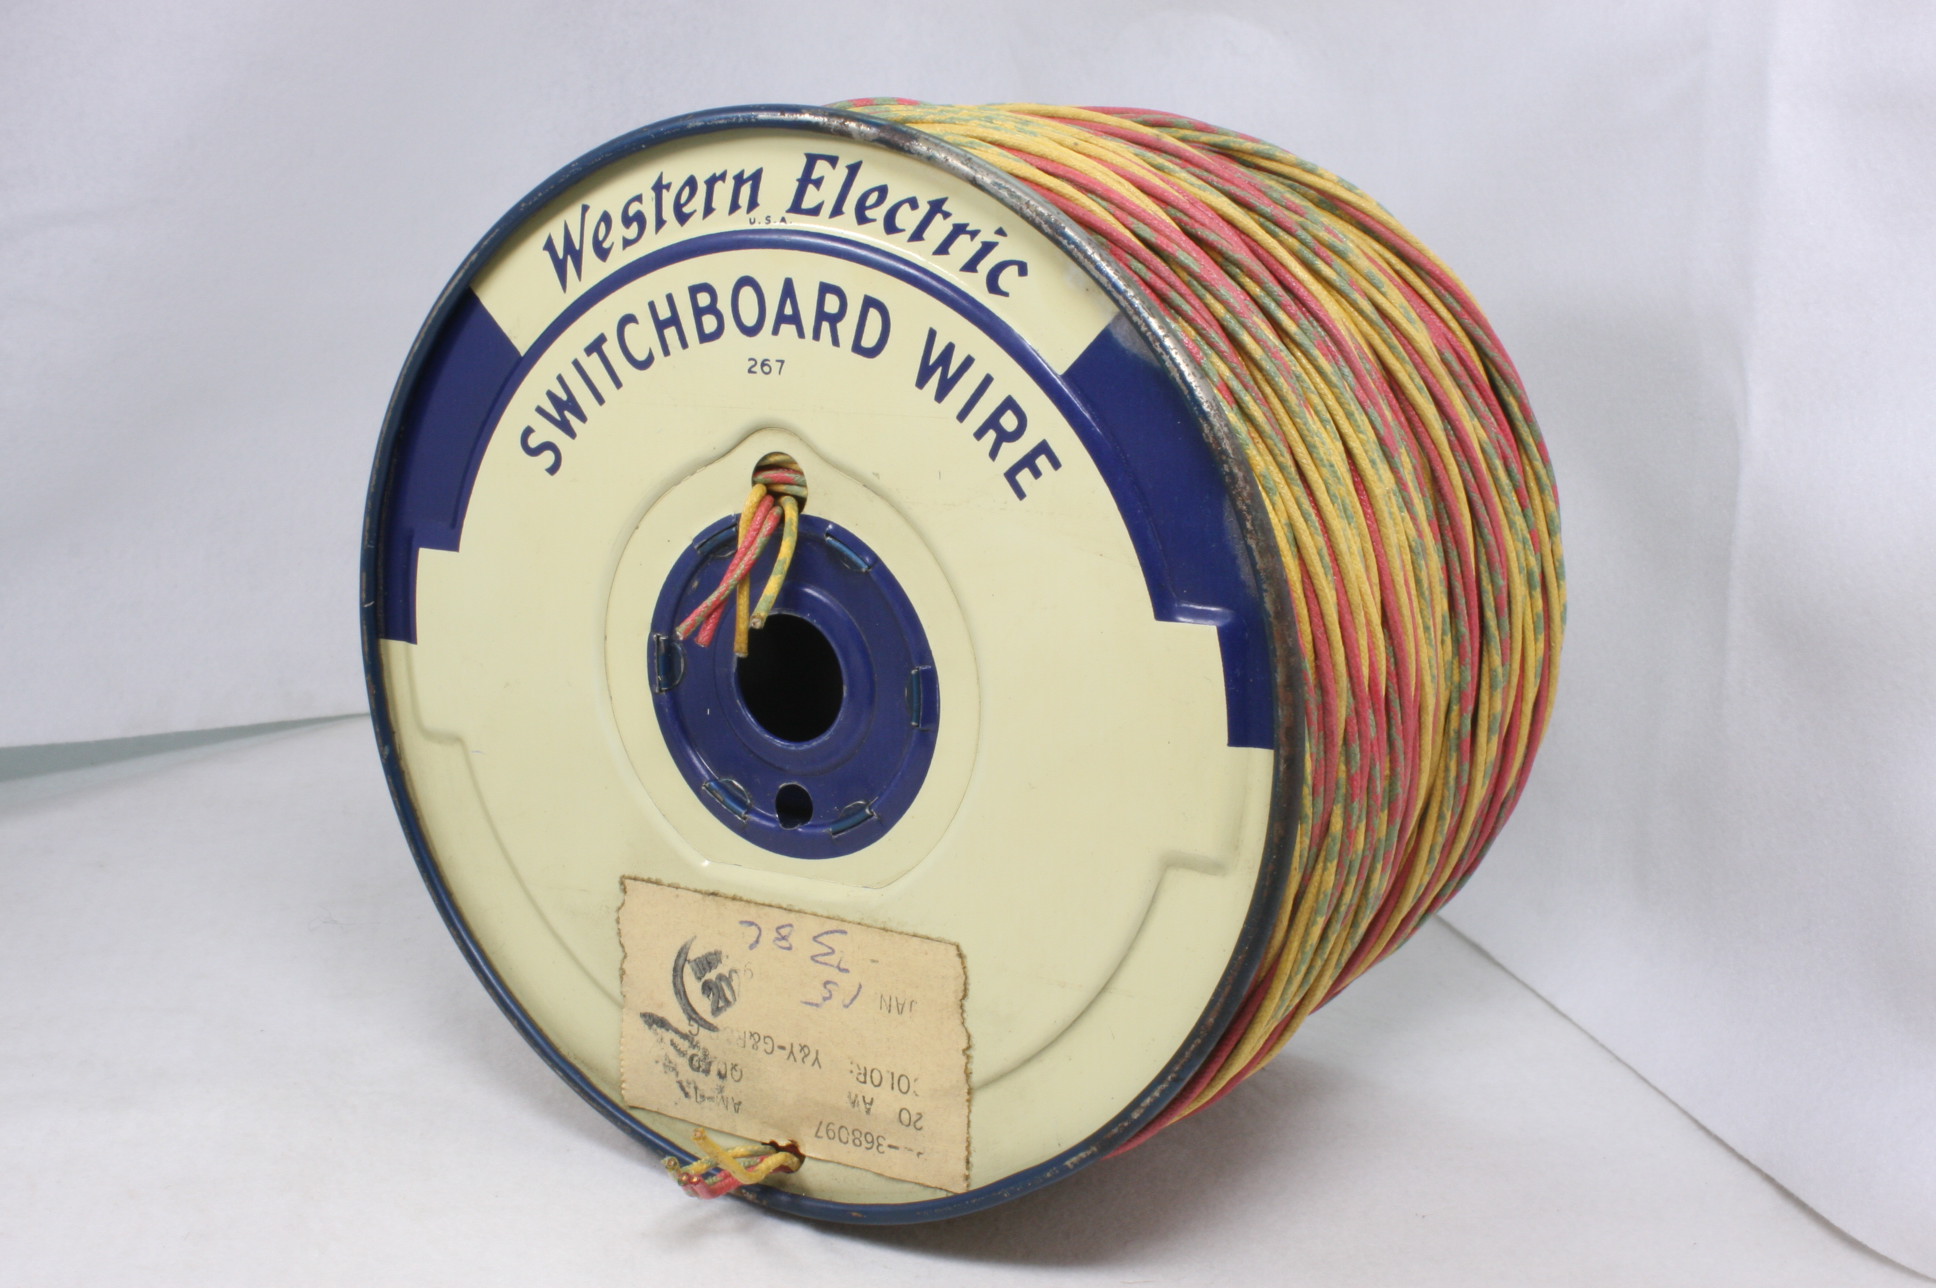 Western Electric スピーカーケーブル WE 絹巻き 単線